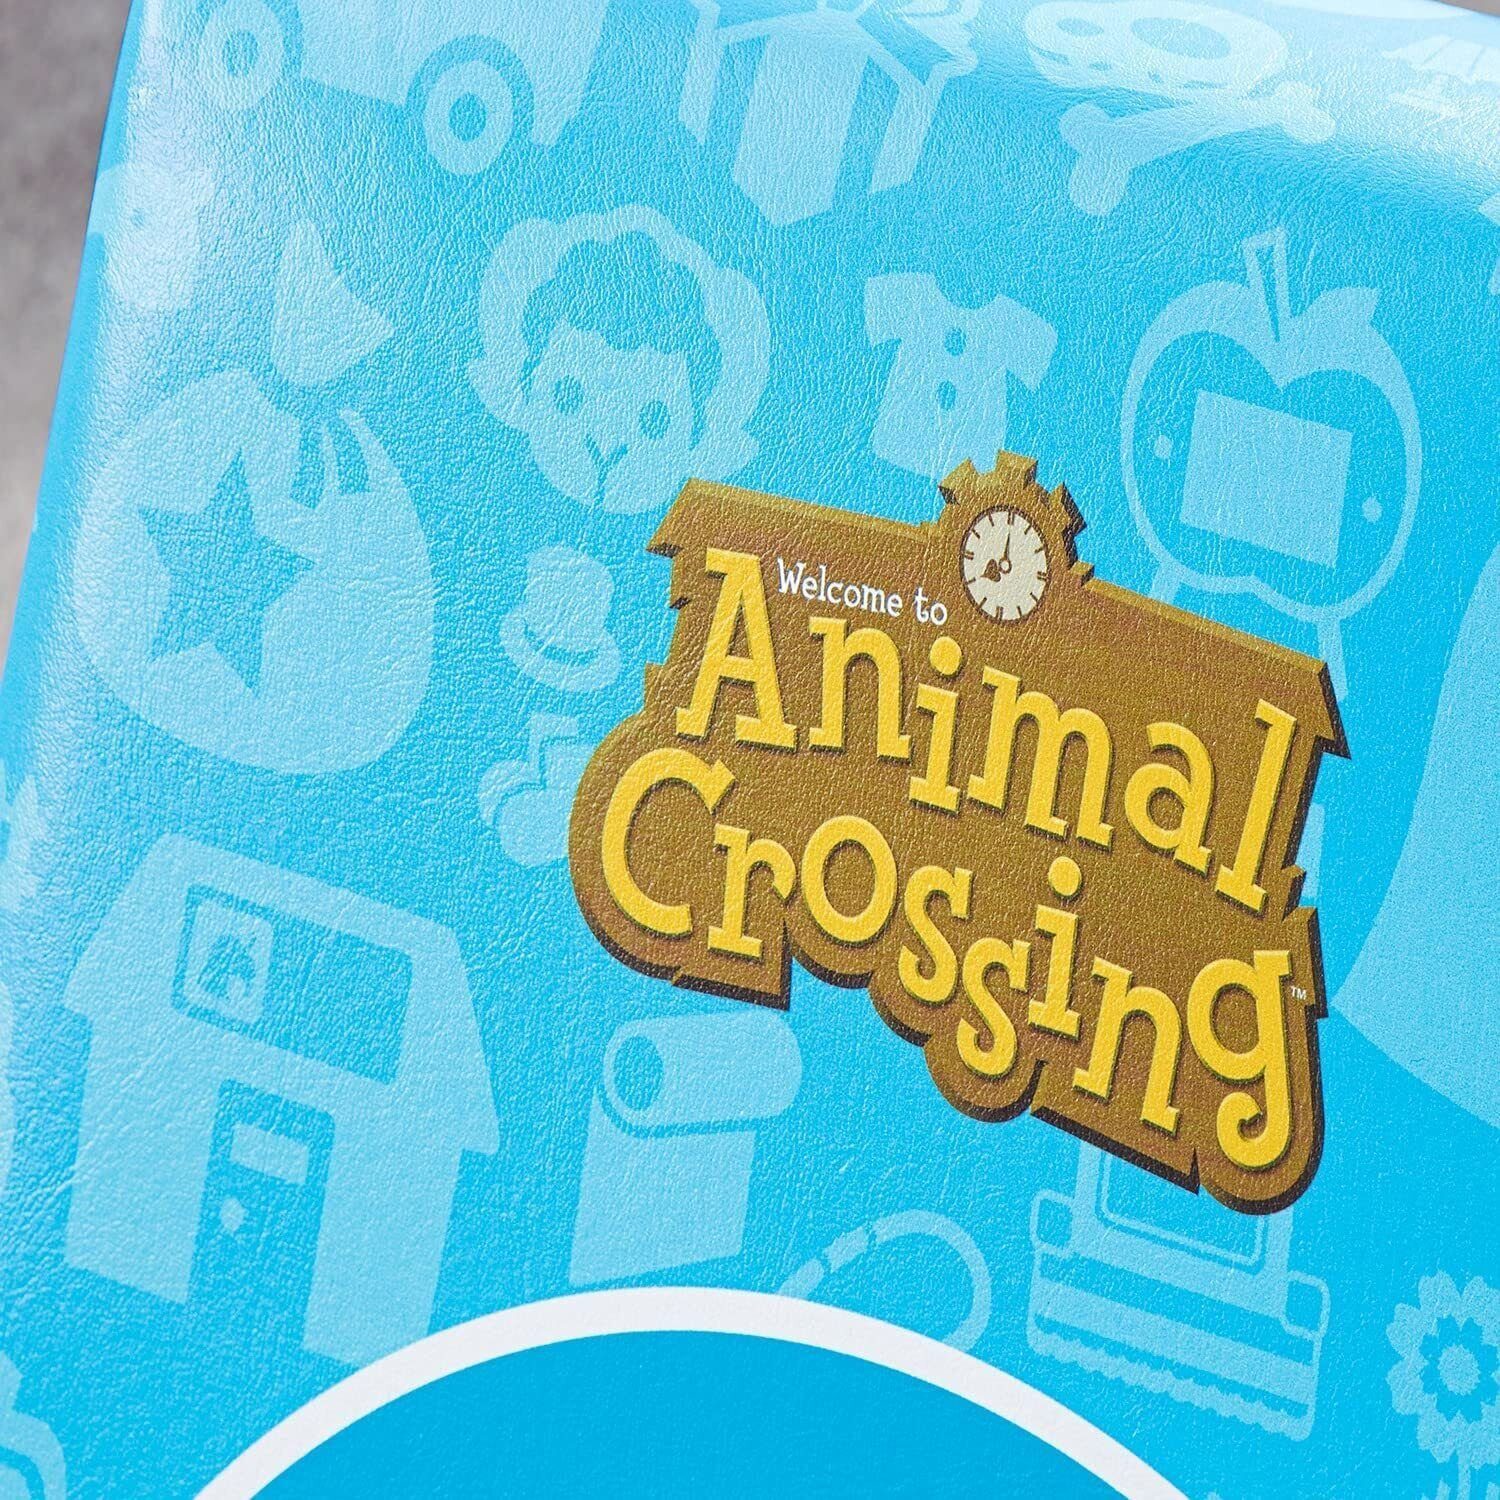 Crossing Animal Rocker Gaming-Stuhl Kinder für Sessel Rocker (Packung) X Gaming Bodensessel X Nintendo